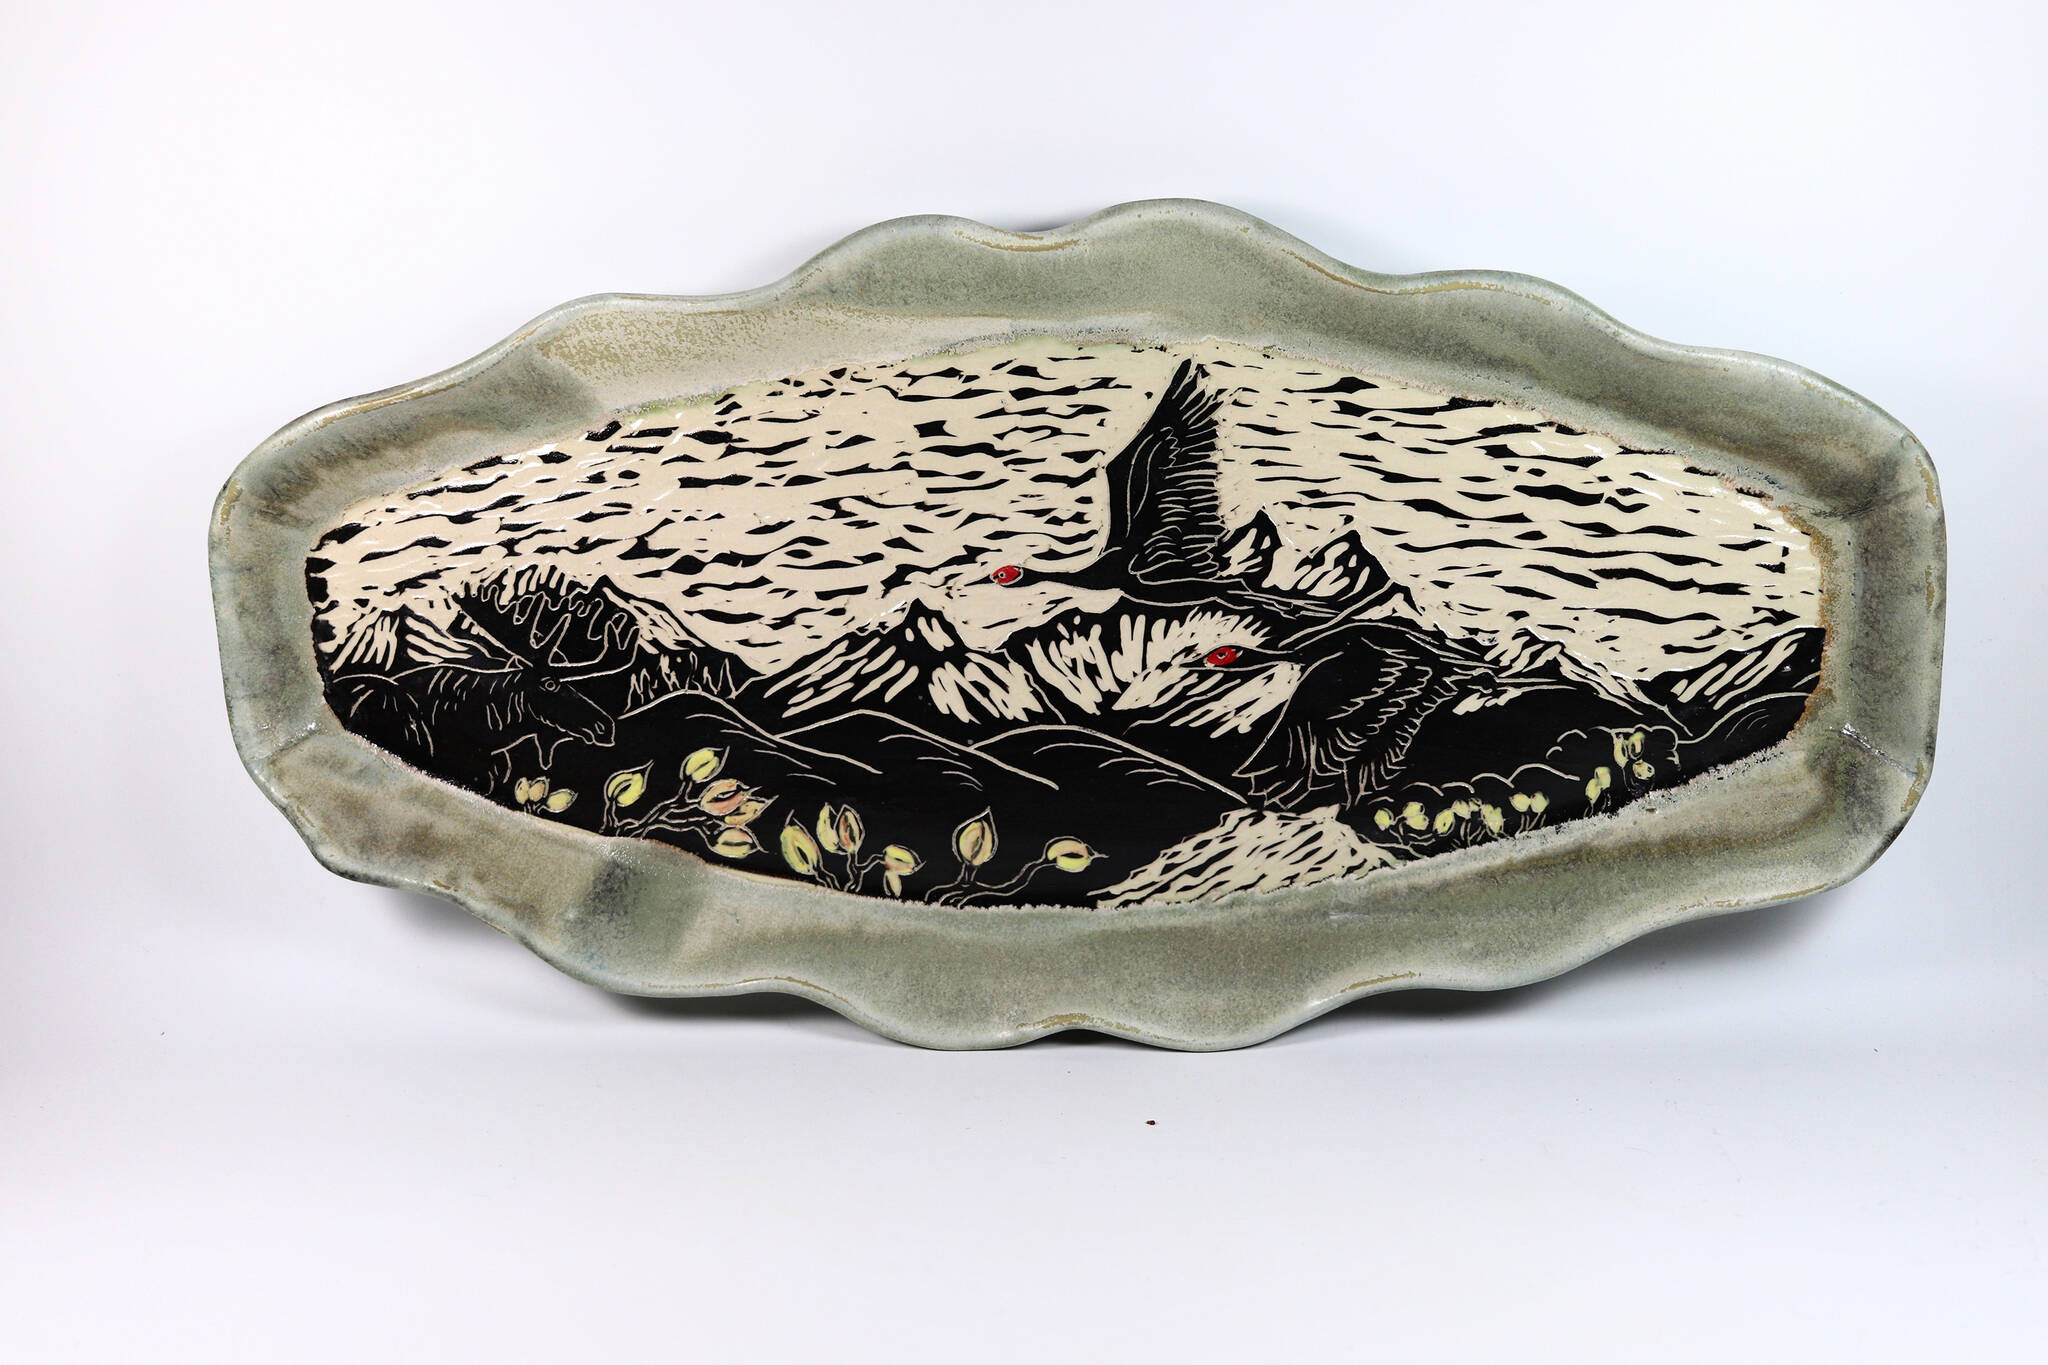 Ceramic art by Jeff Szarzi shows for December at Ptarmigan Arts in Homer, Alaska. (Photo courtesy of Ptarmigan Arts)